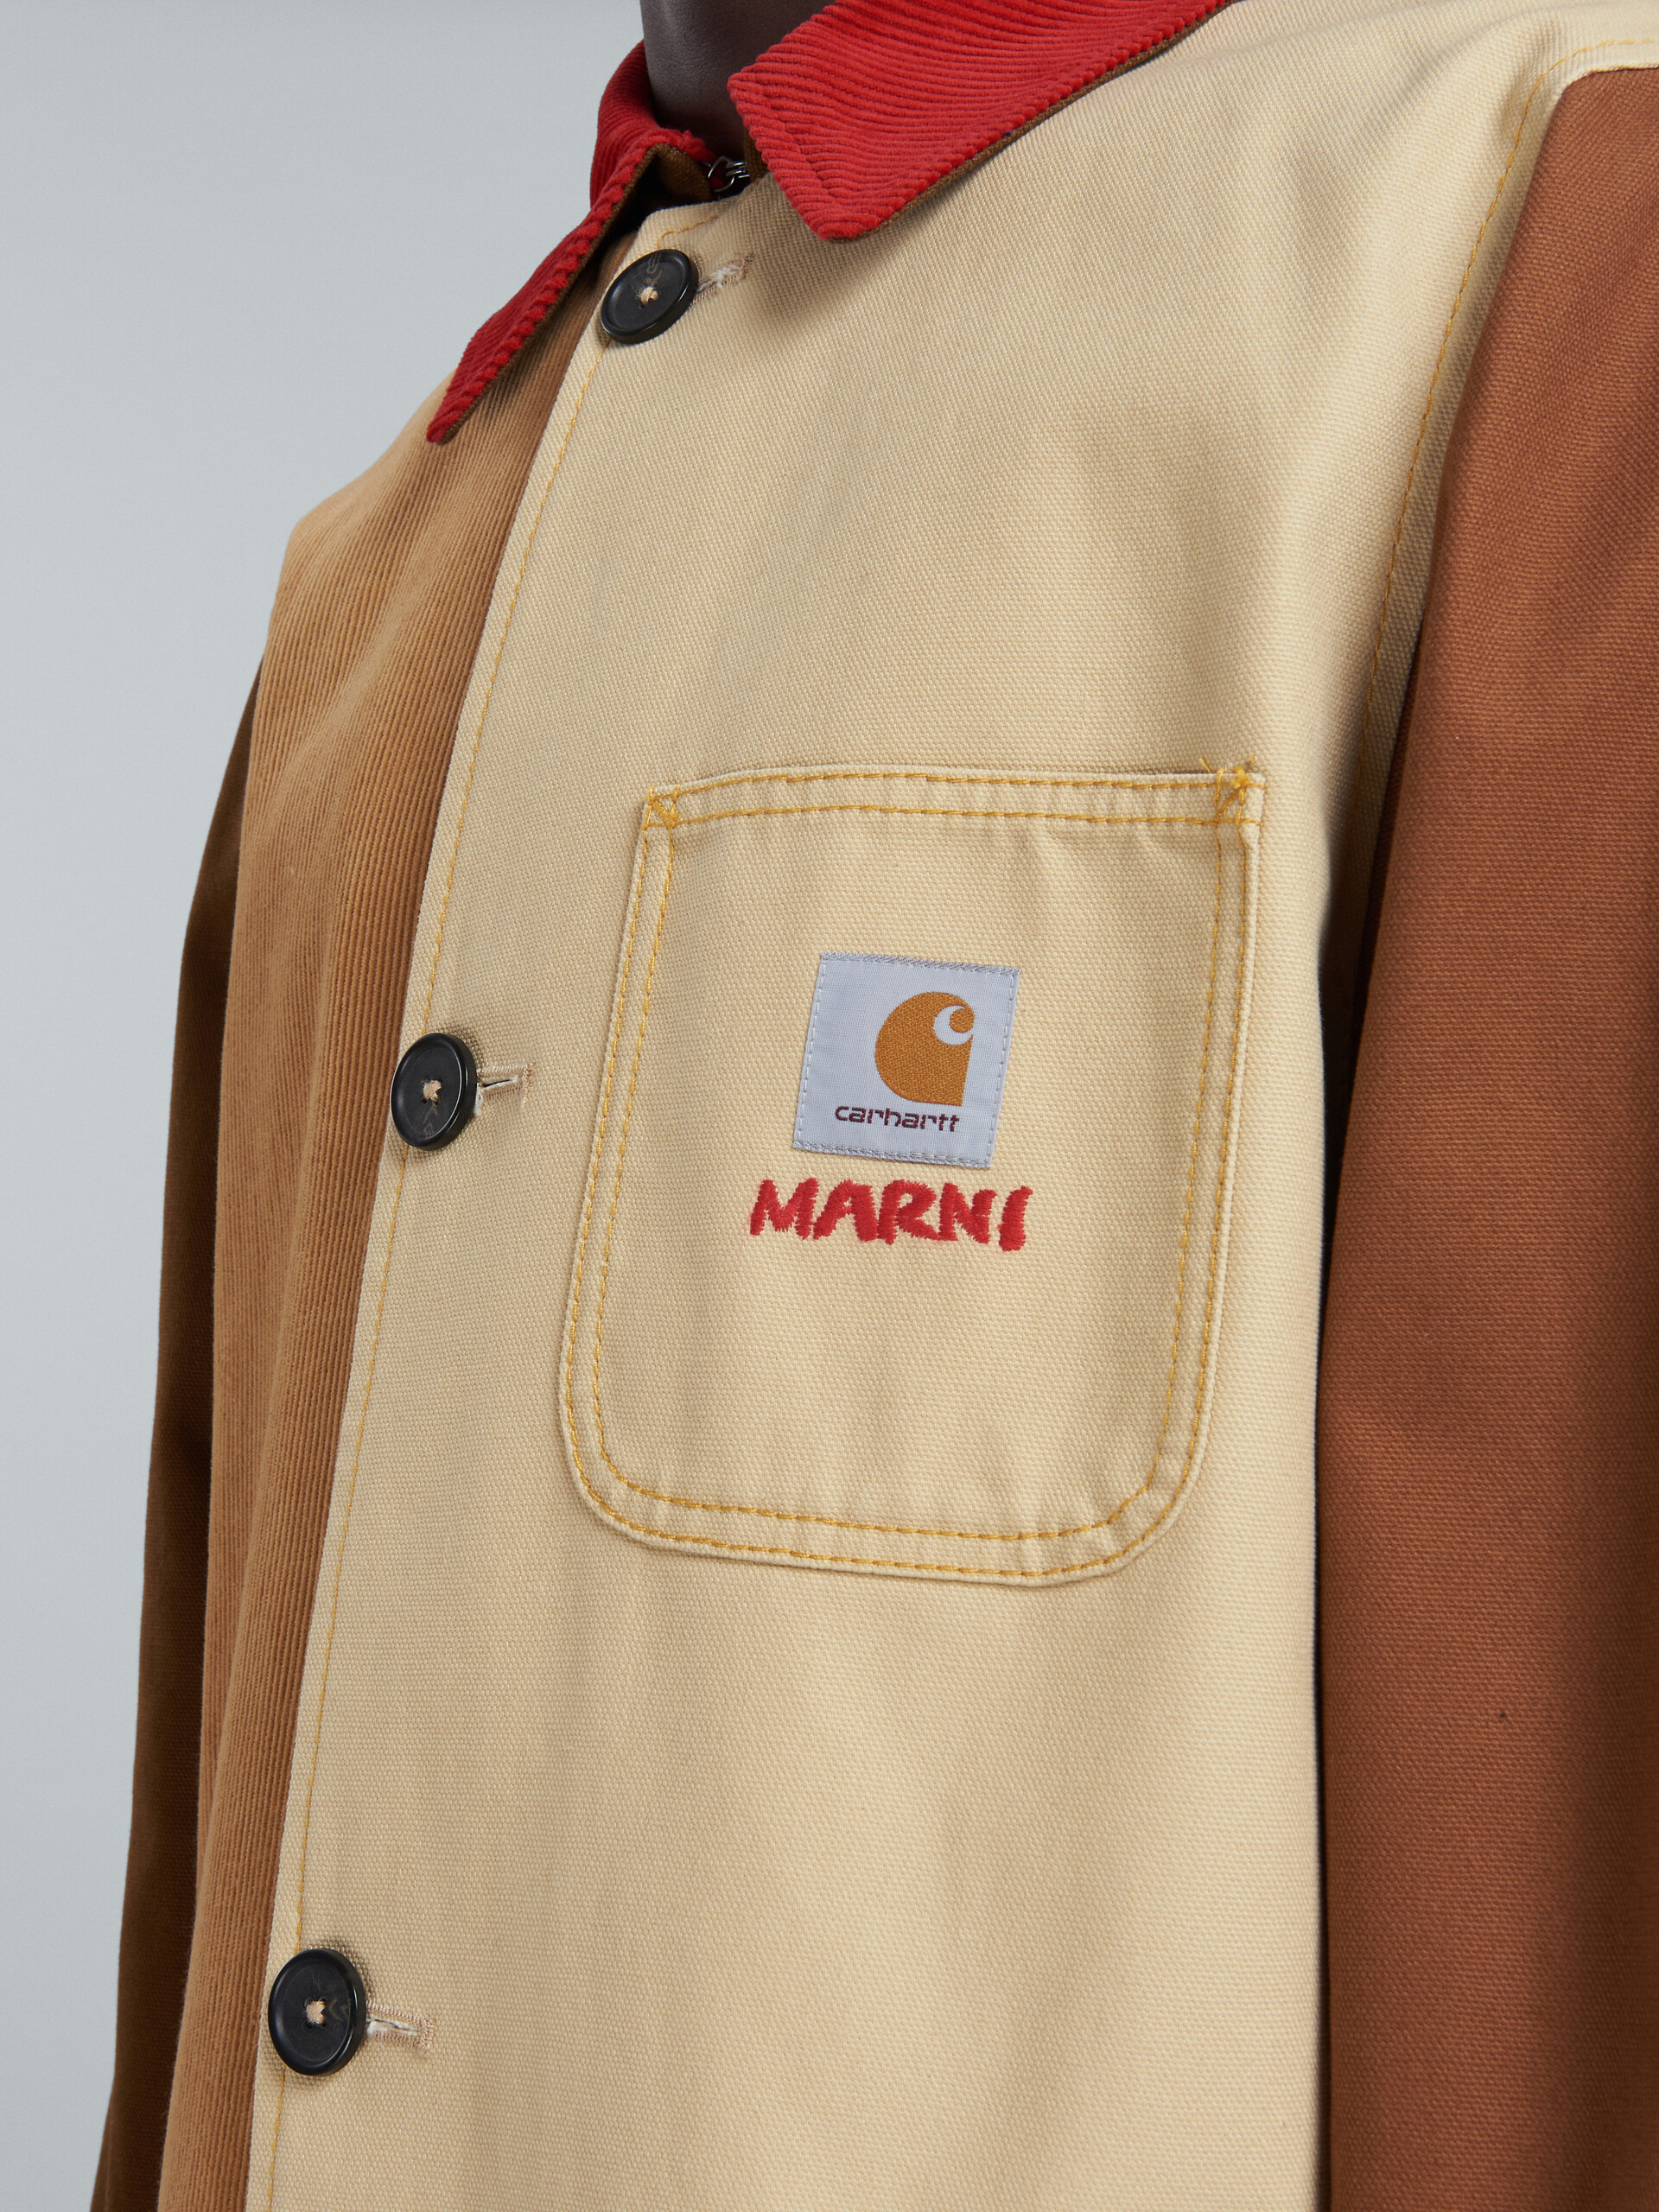 MARNI x CARHARTT WIP - brown colour-block coat - Coats - Image 5